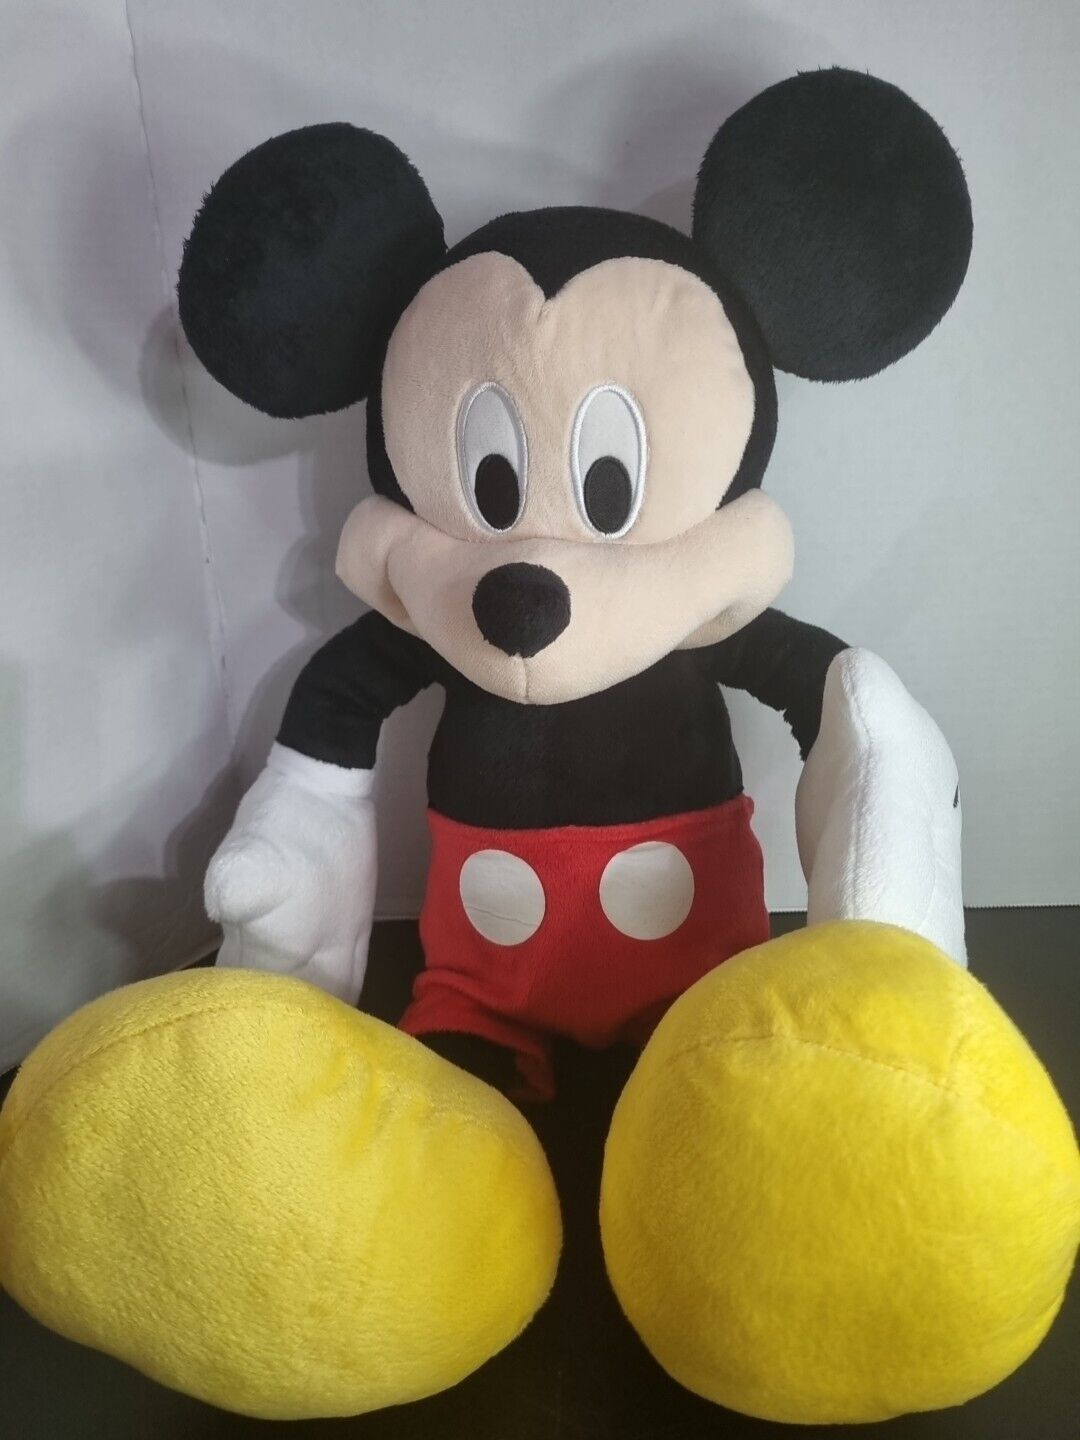 Disney Junior Store Mickey Mouse Stuffed Plush Toy Large 24